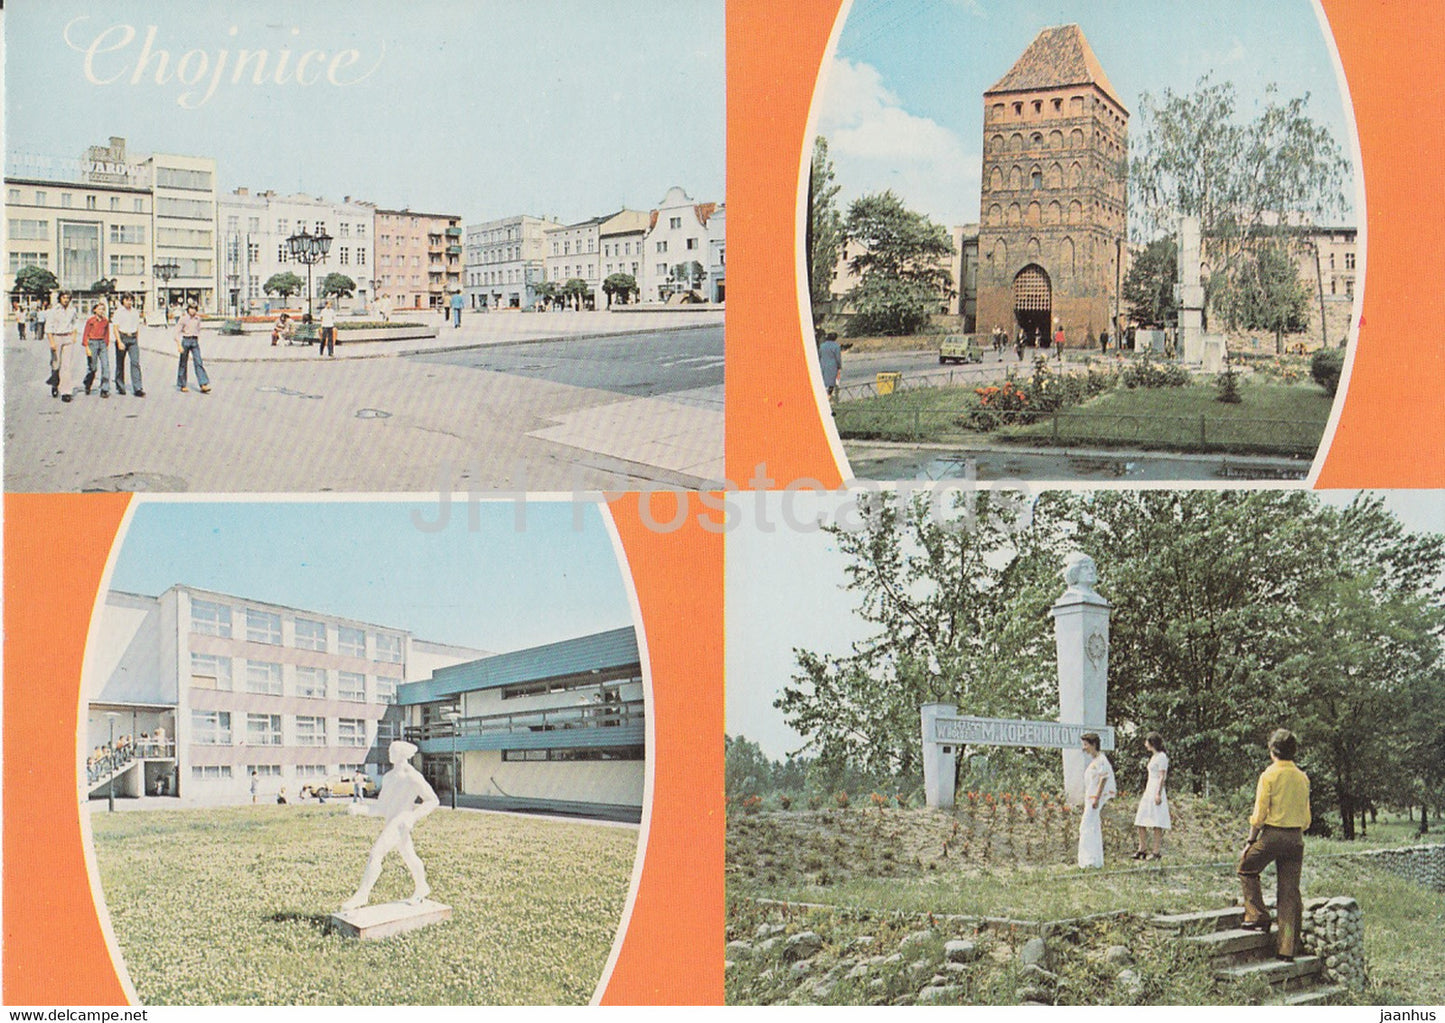 Chojnice - square - museum - monument - multiview - Bulgaria - unused - JH Postcards